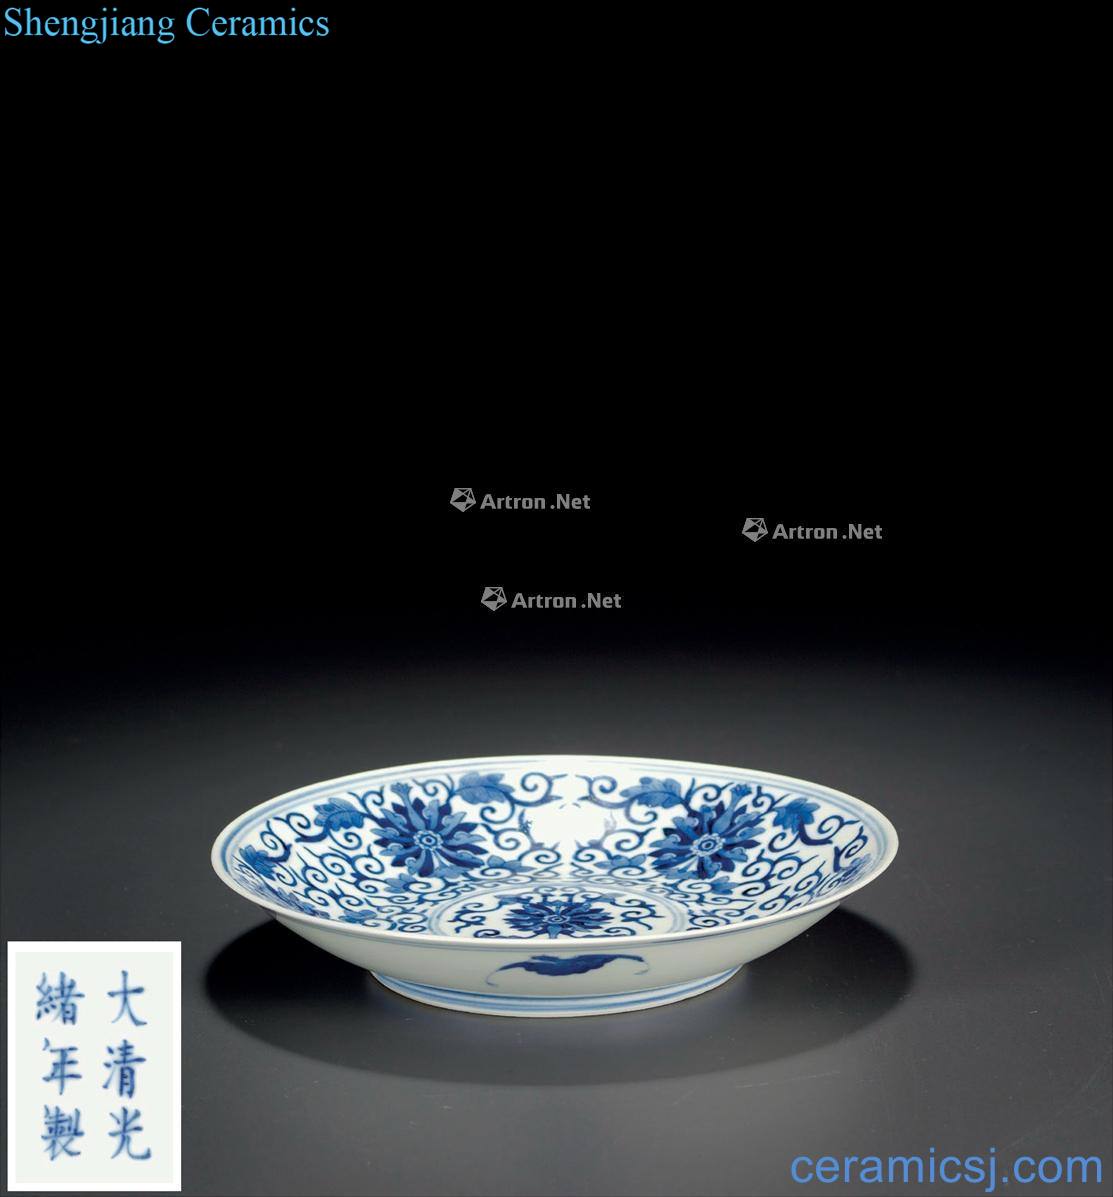 Qing qing guangxu year blue treasure phase pattern plate